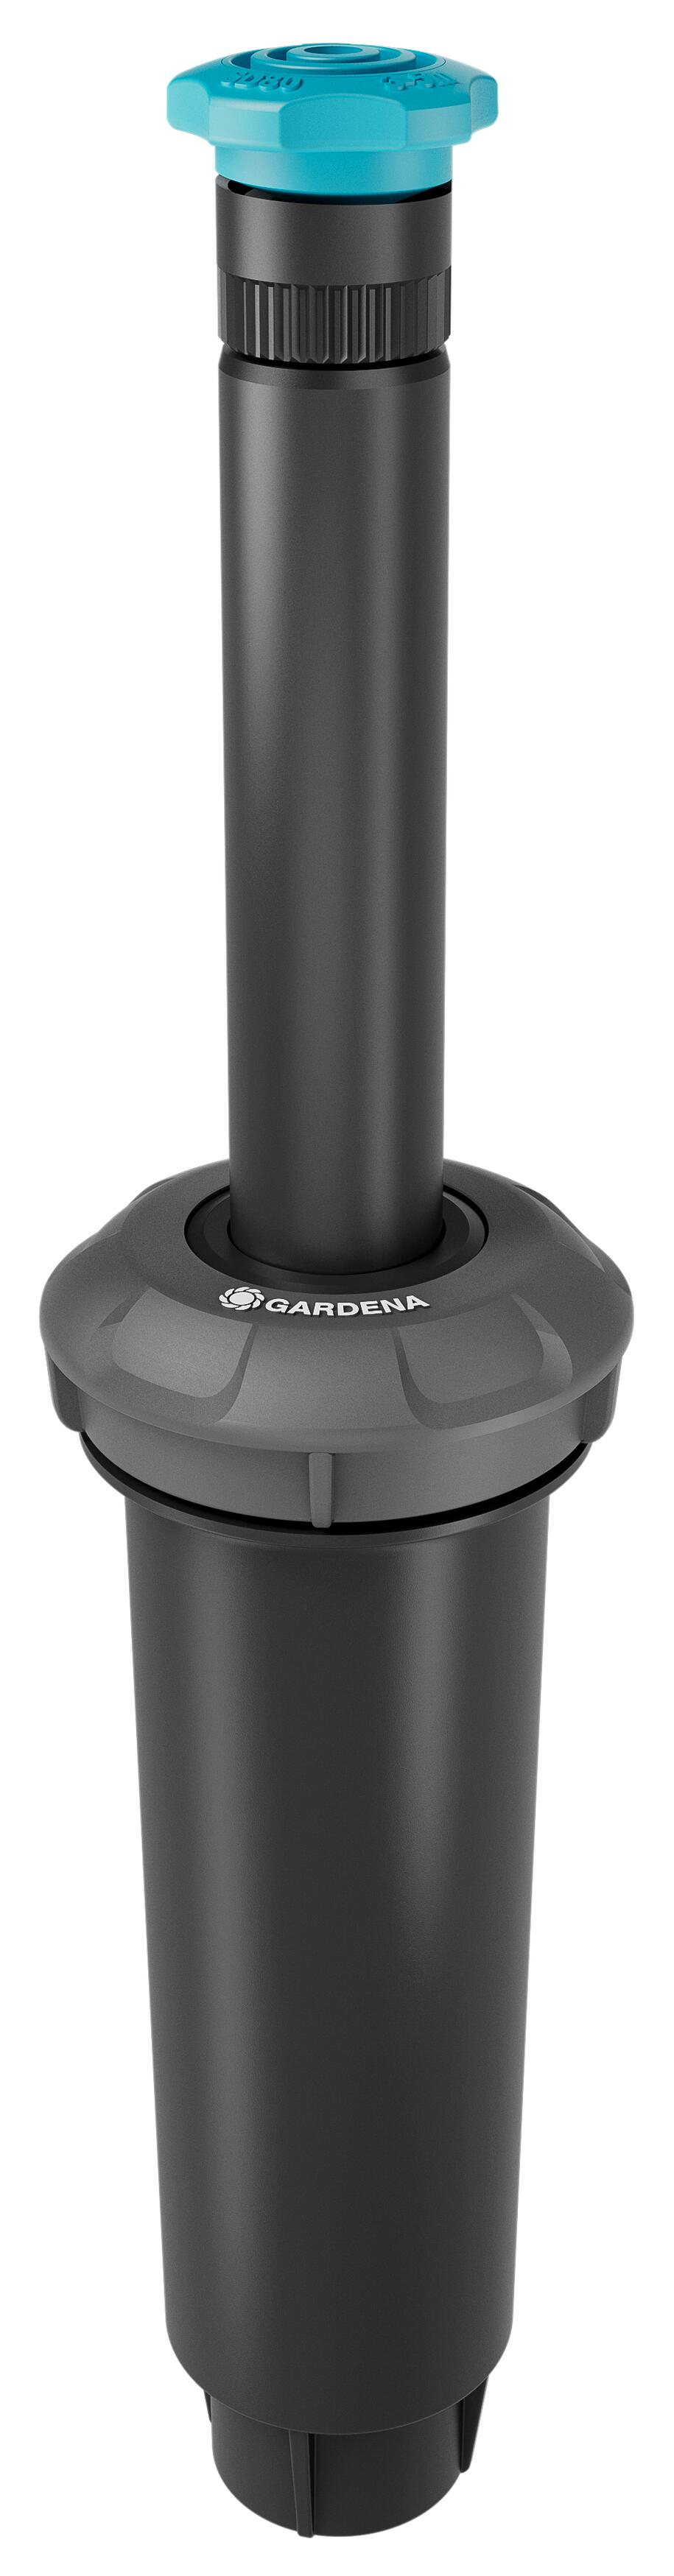 Gardena 8243-20 retractable sprinkler SD80